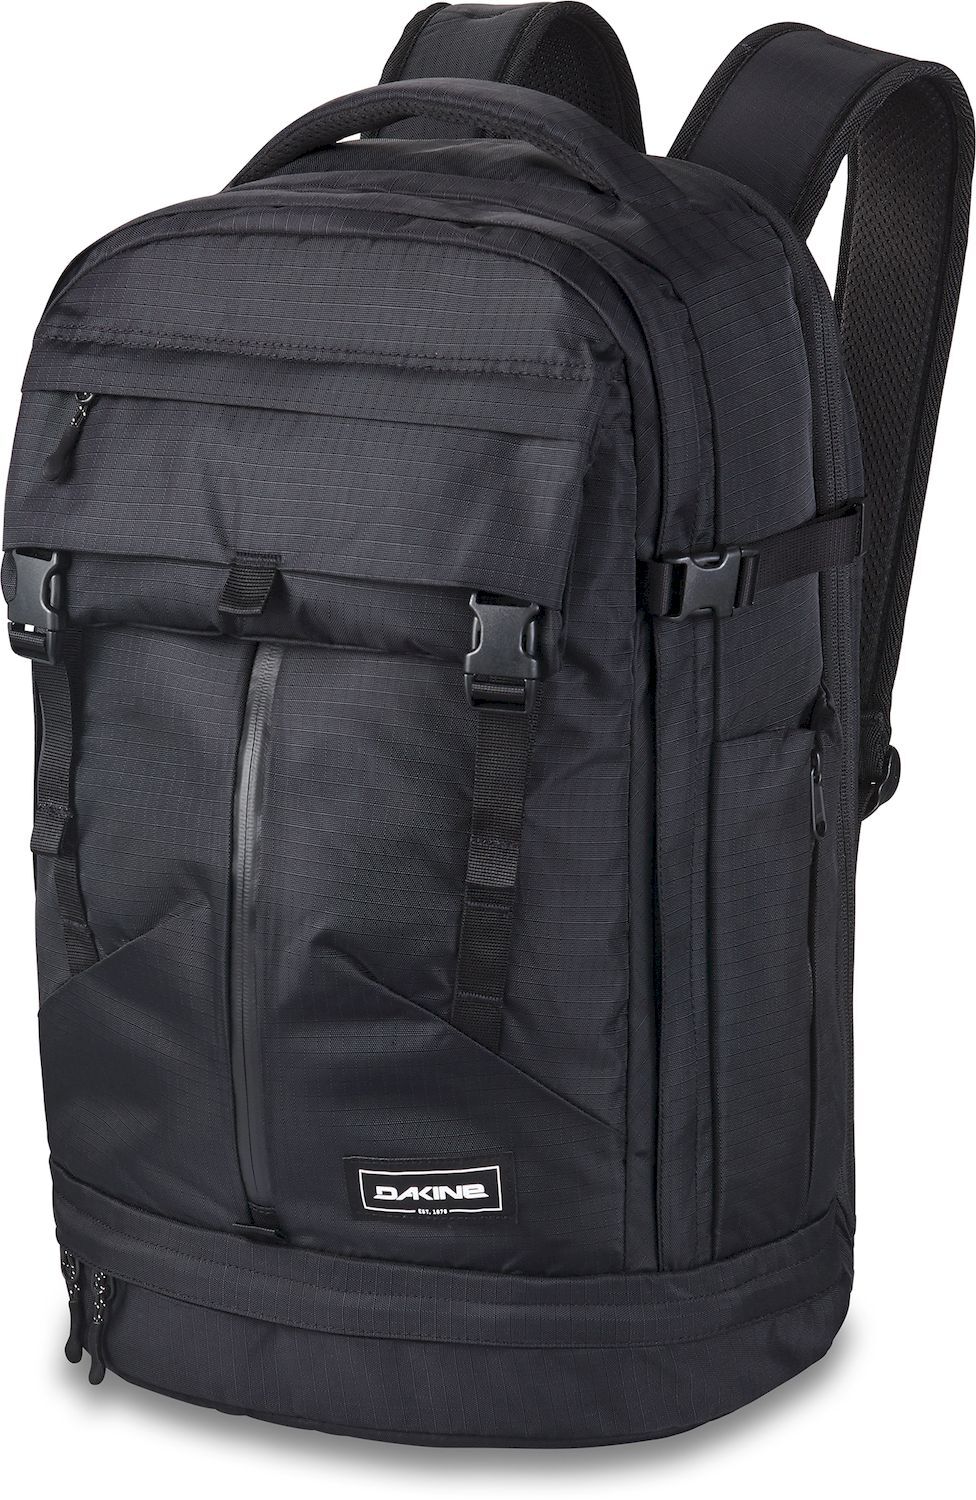 Dakine Verge Backpack 32L - Travel backpack